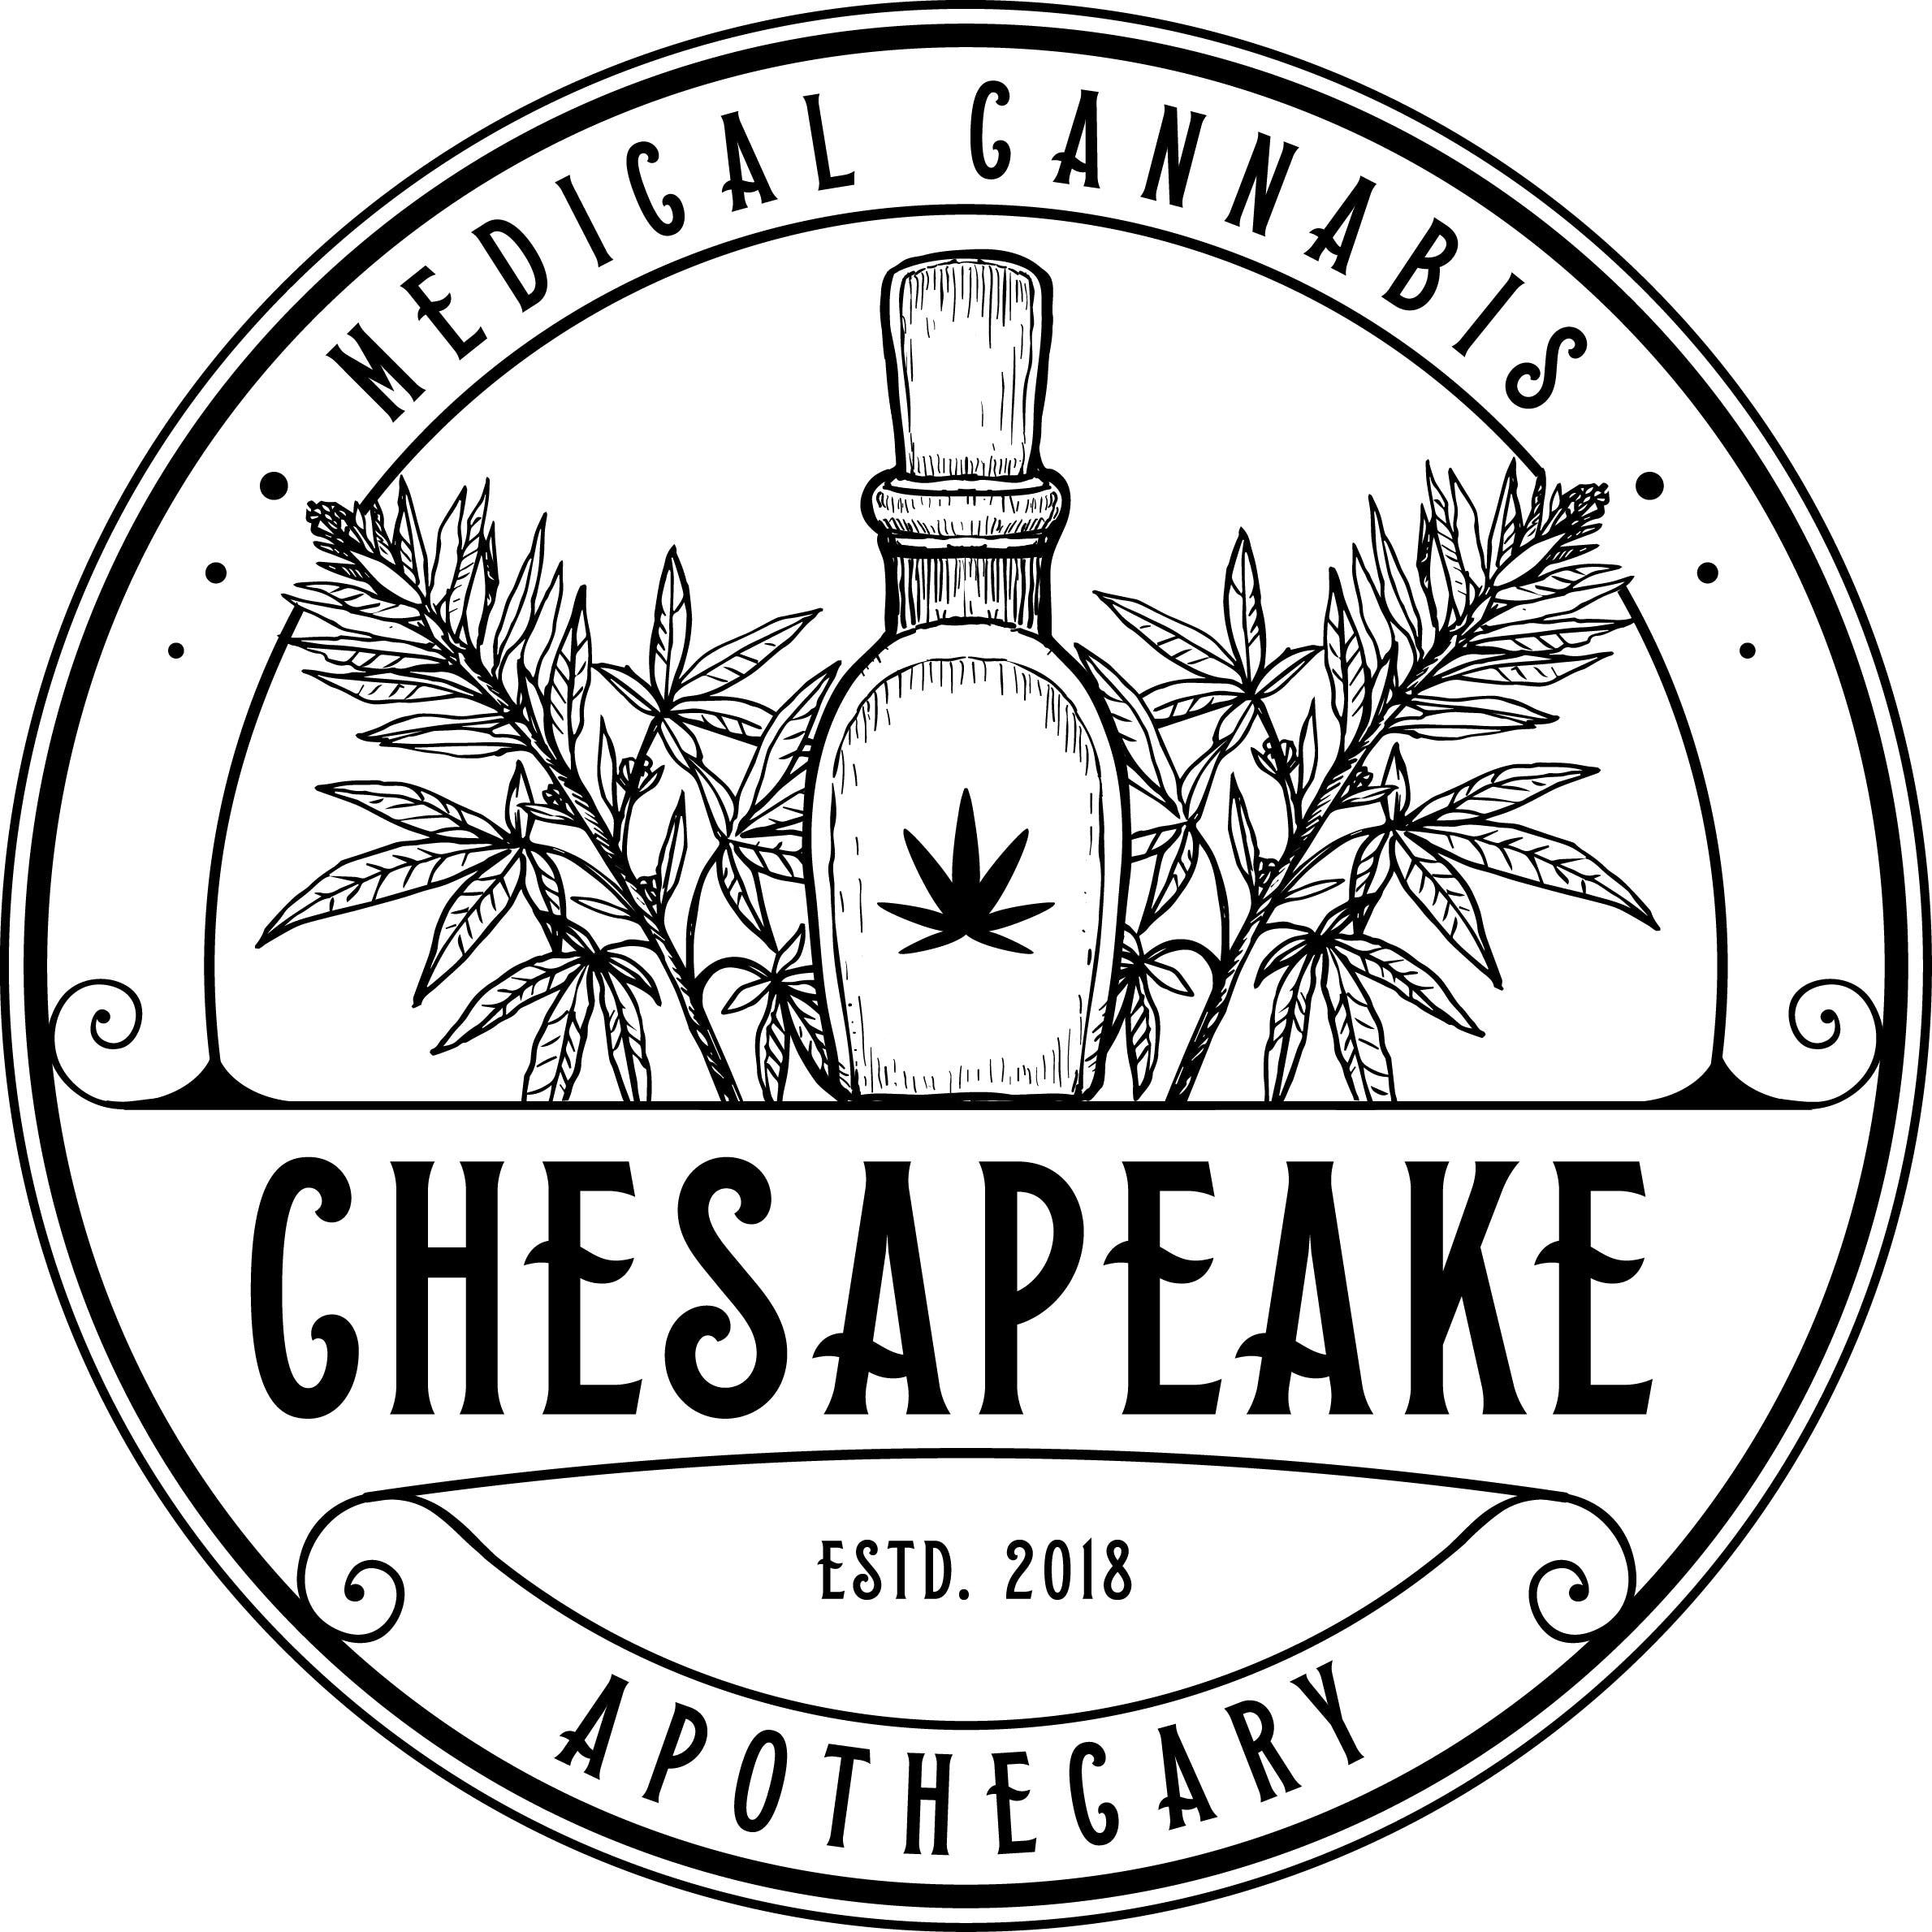 Chesapeake Apothecary - Medical Marijuana Doctors - Cannabizme.com